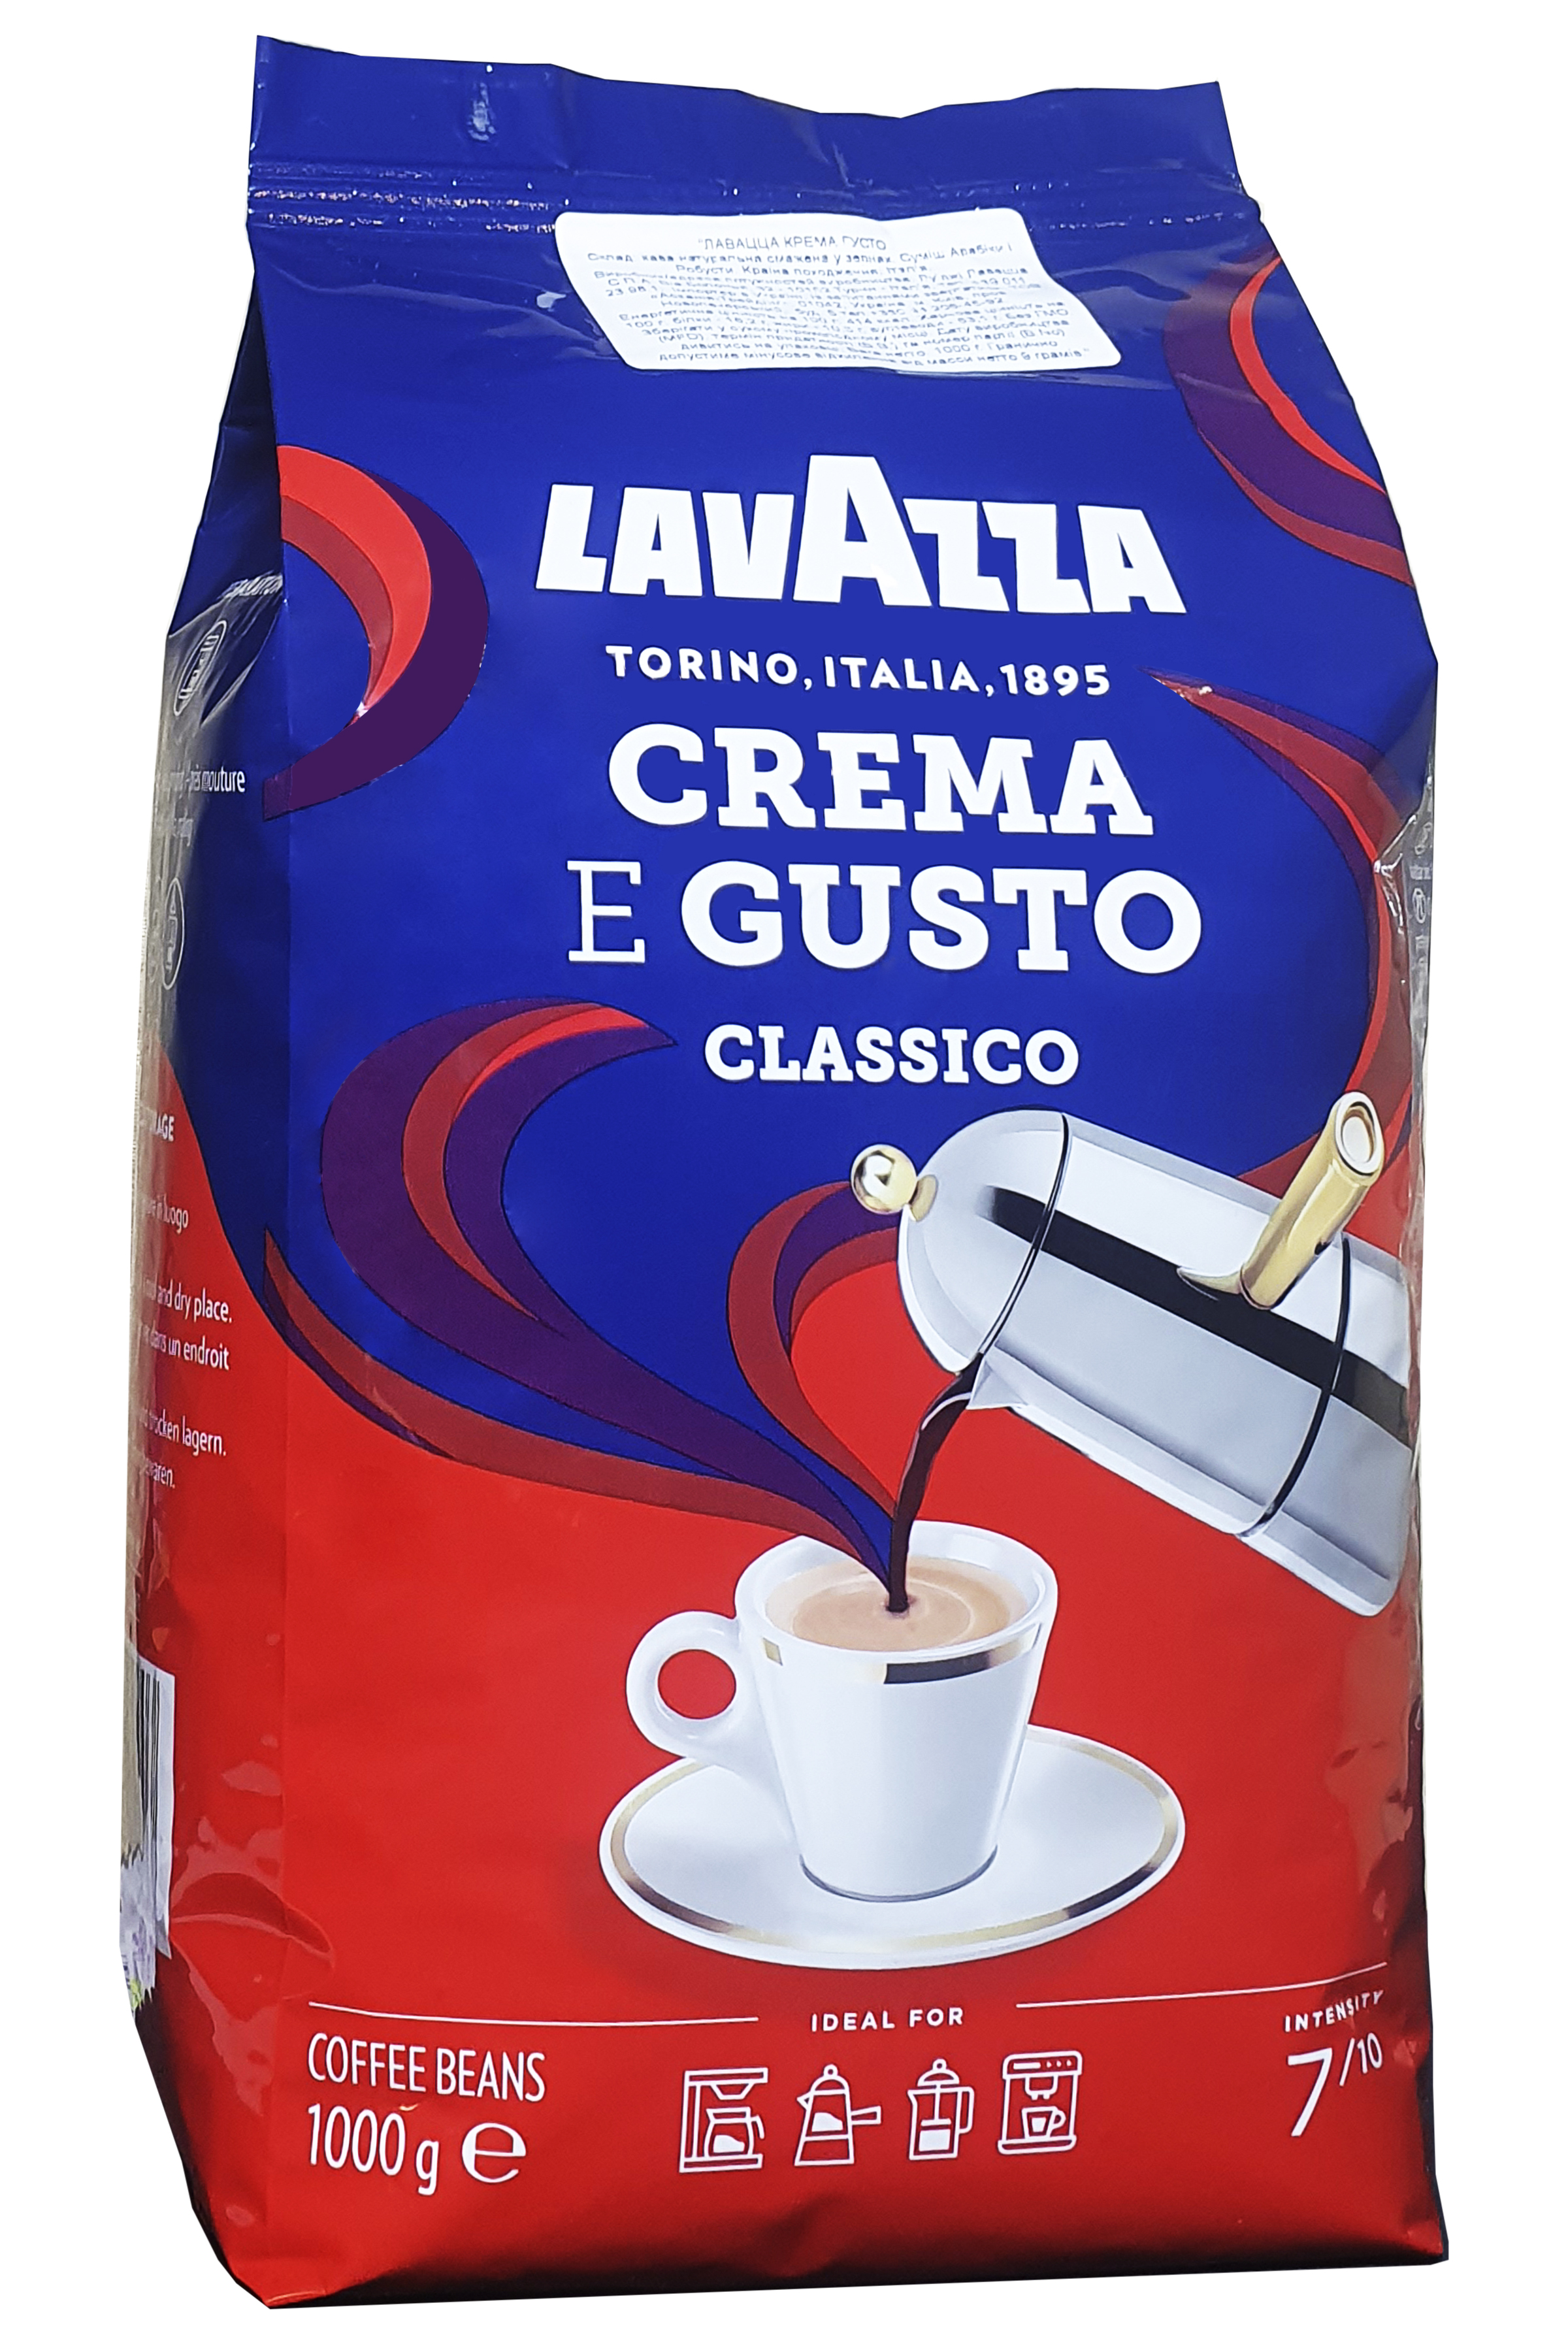 Lavazza crema отзывы. Кофе Lavazza crema e gusto Classico. Lavazza crema e gusto Classico, вакуумная. Филижанка кавы. Кофе молотый Lavazza crema e gusto БЖУ.